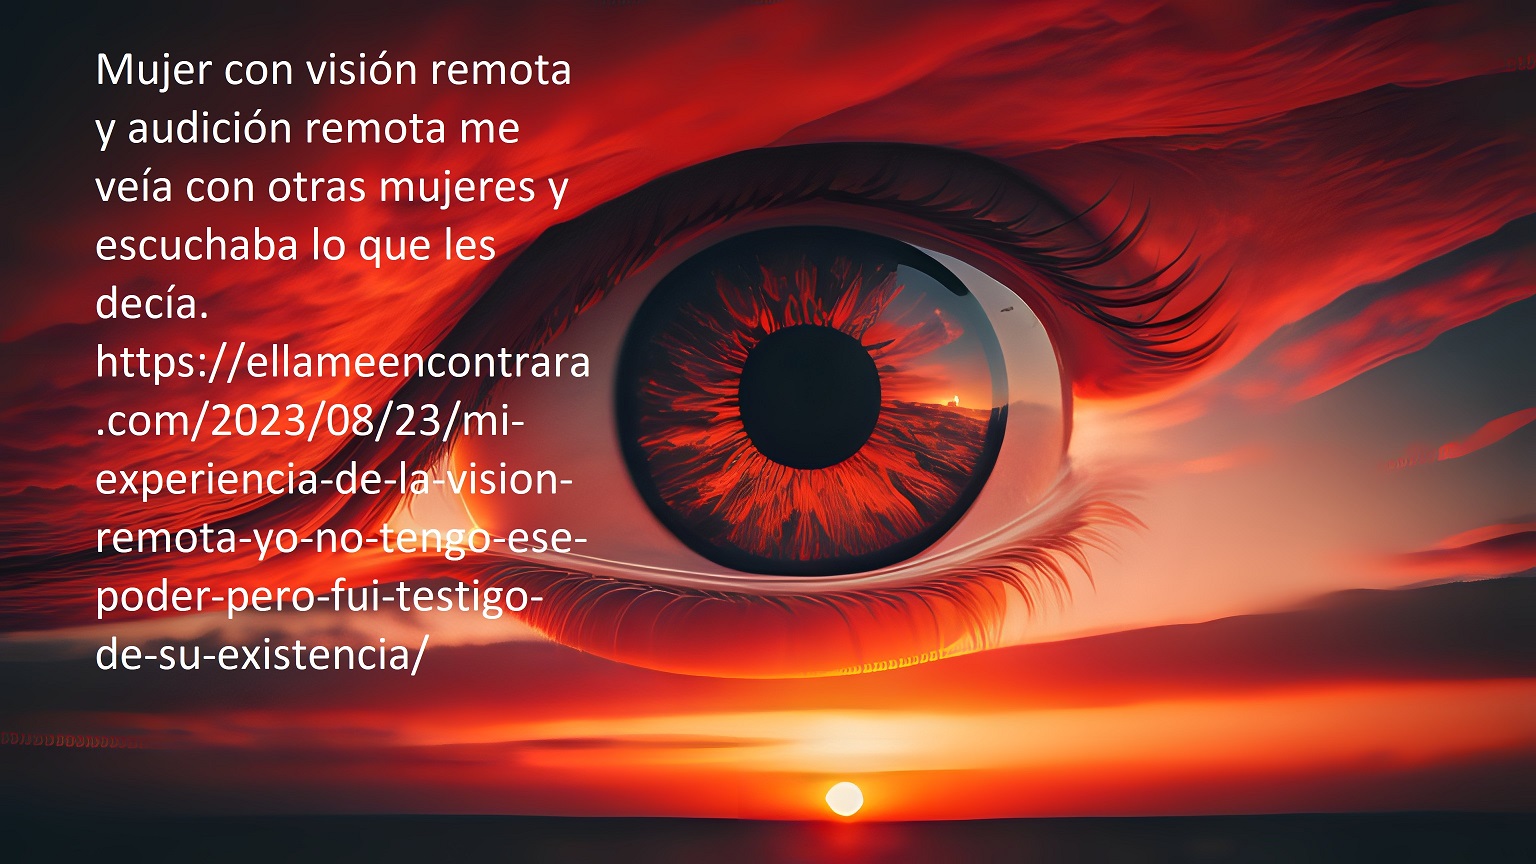 Vision remota